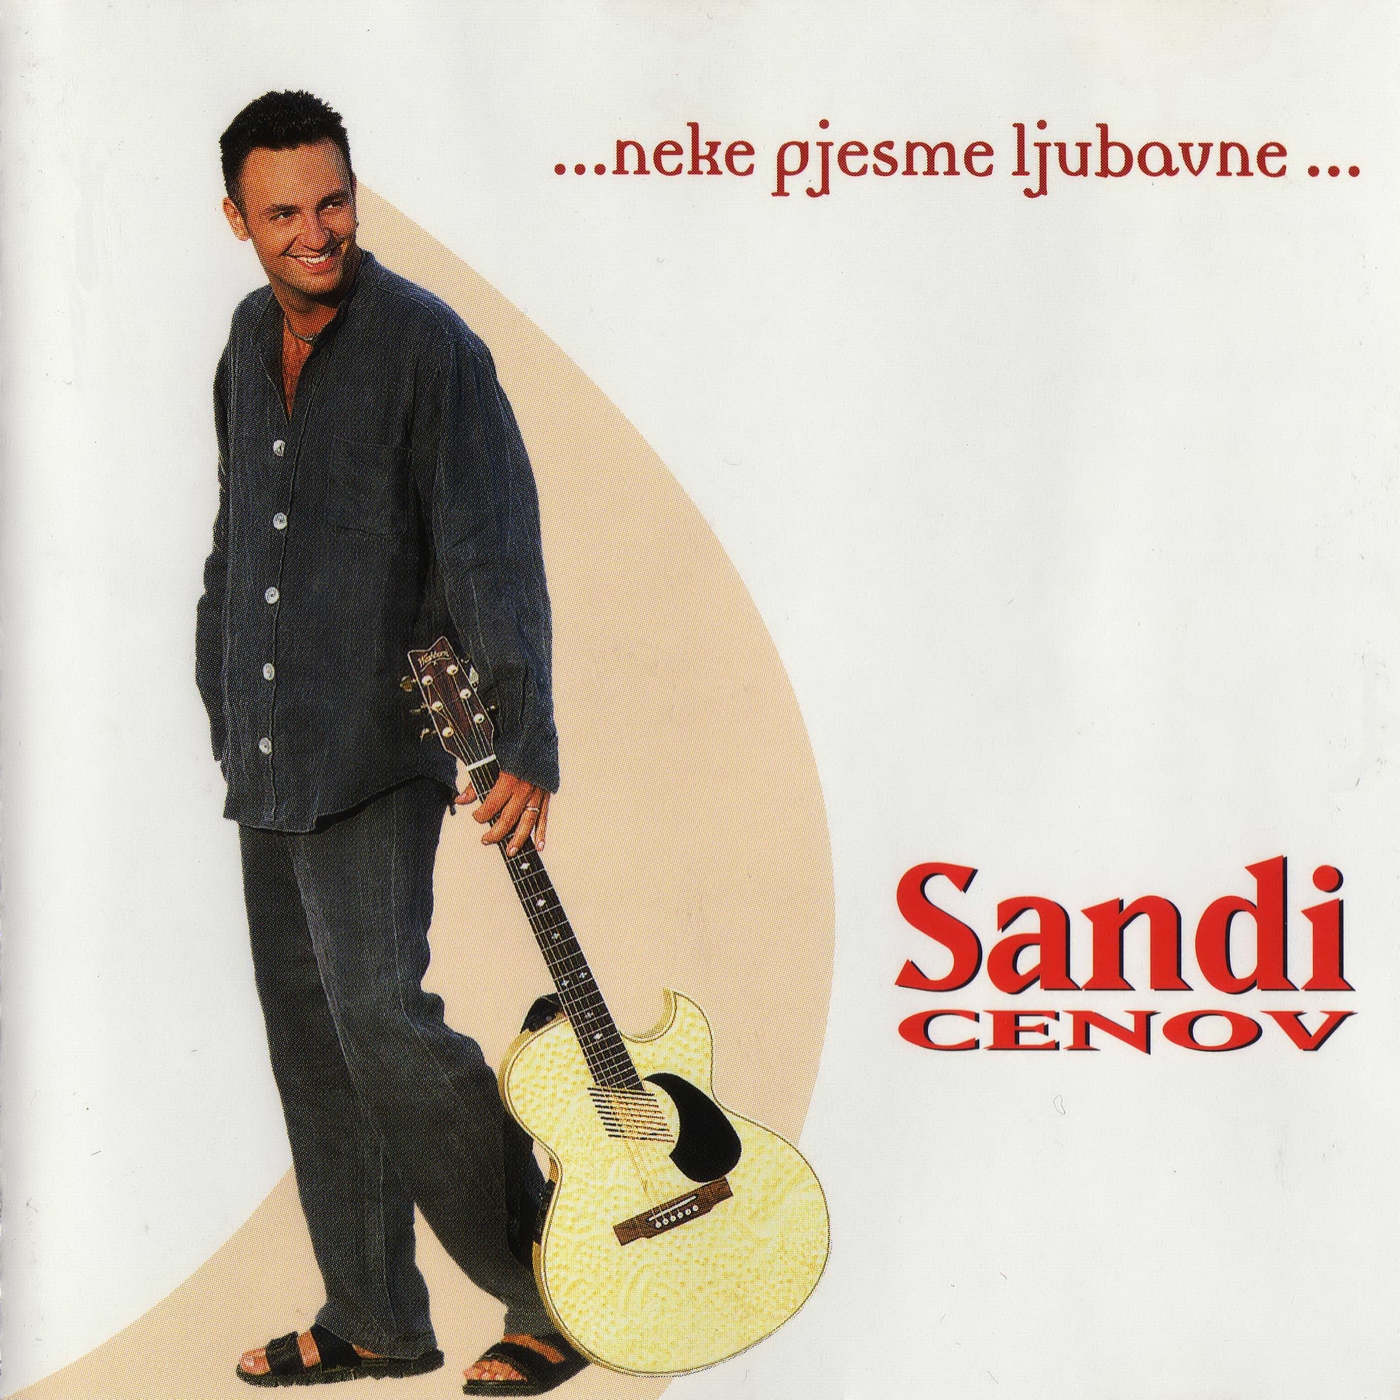 Sandi cenov - neke pjesme ljubavne 1998.